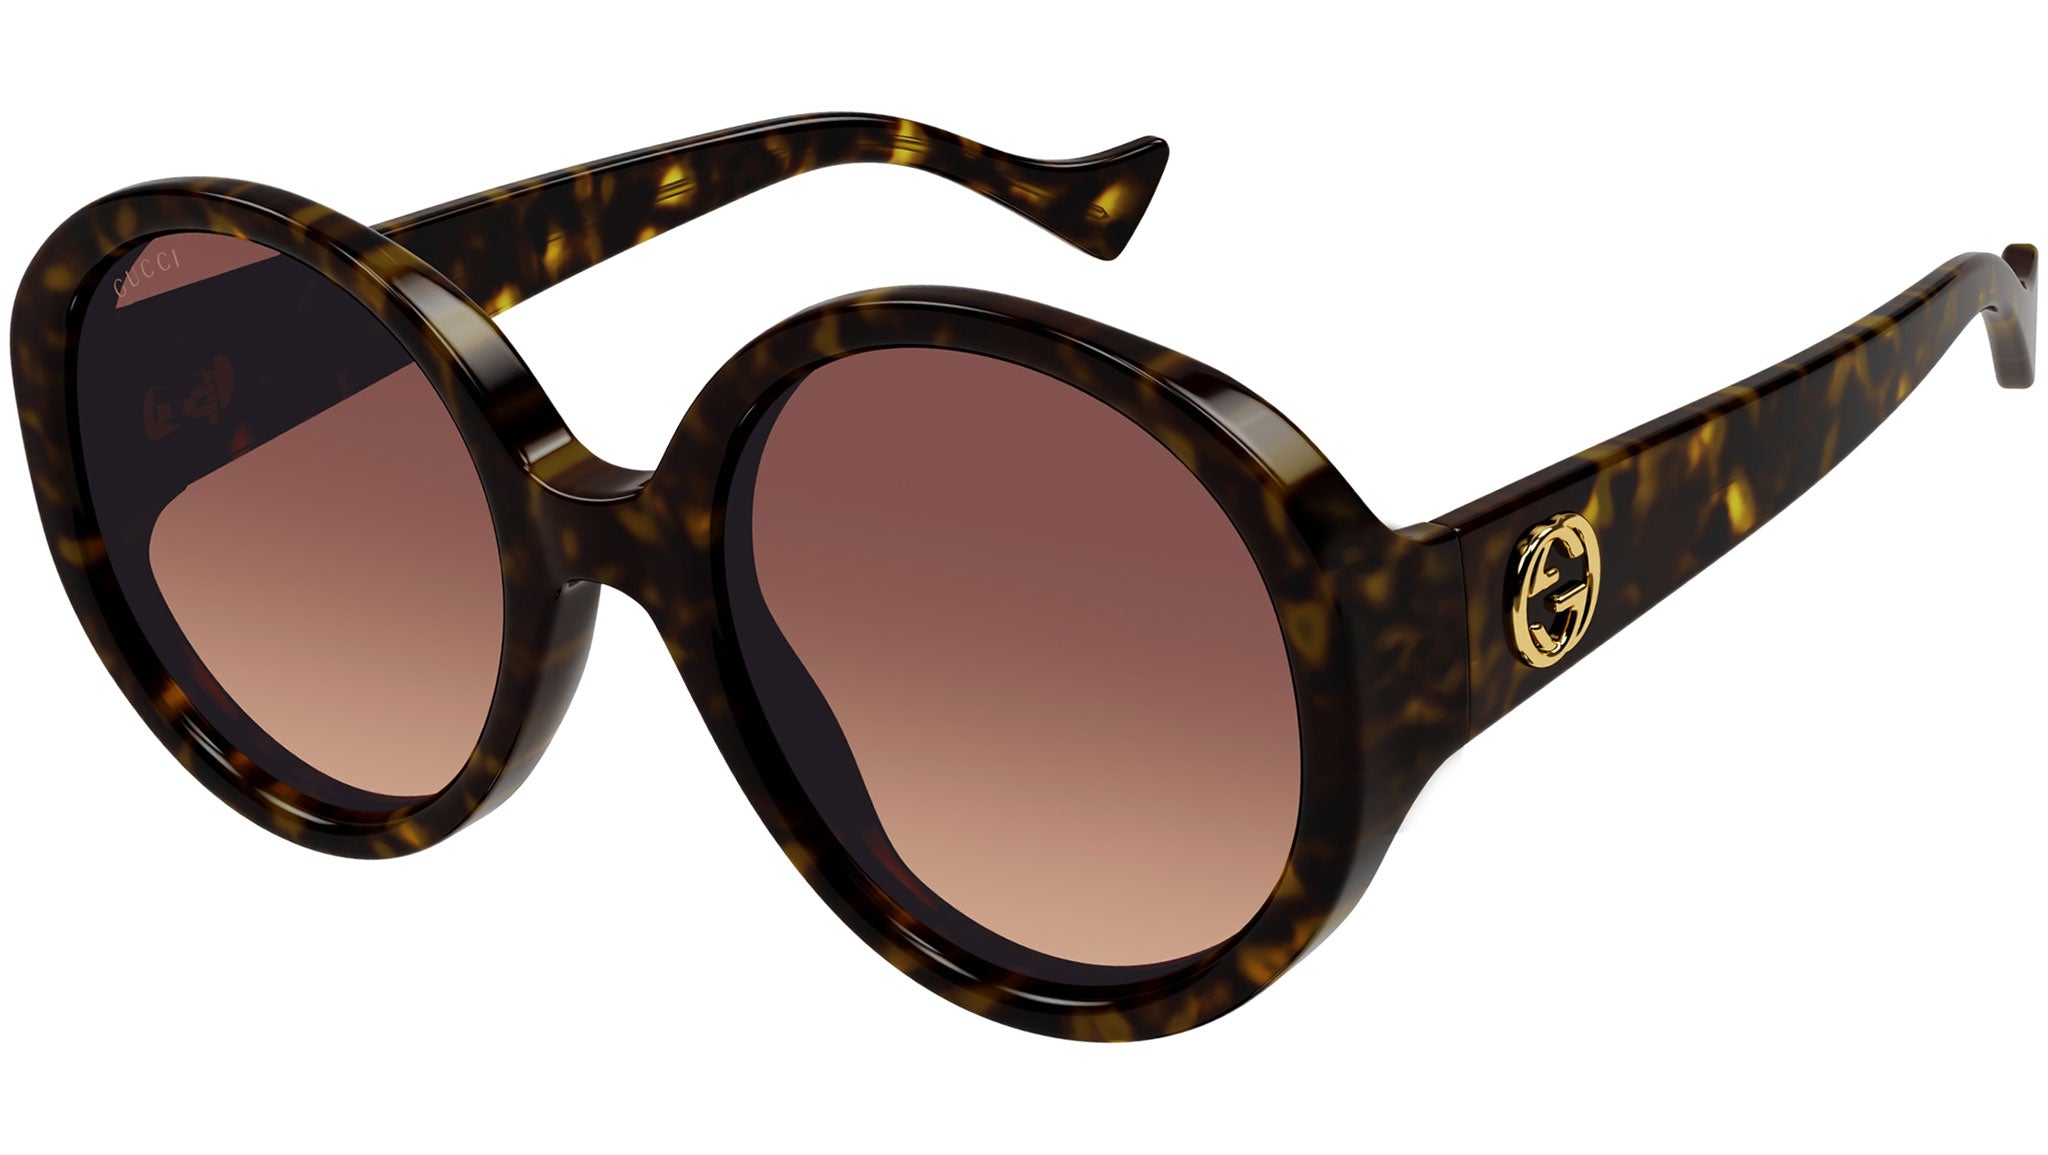 Gucci 56mm Gradient Round Sunglasses